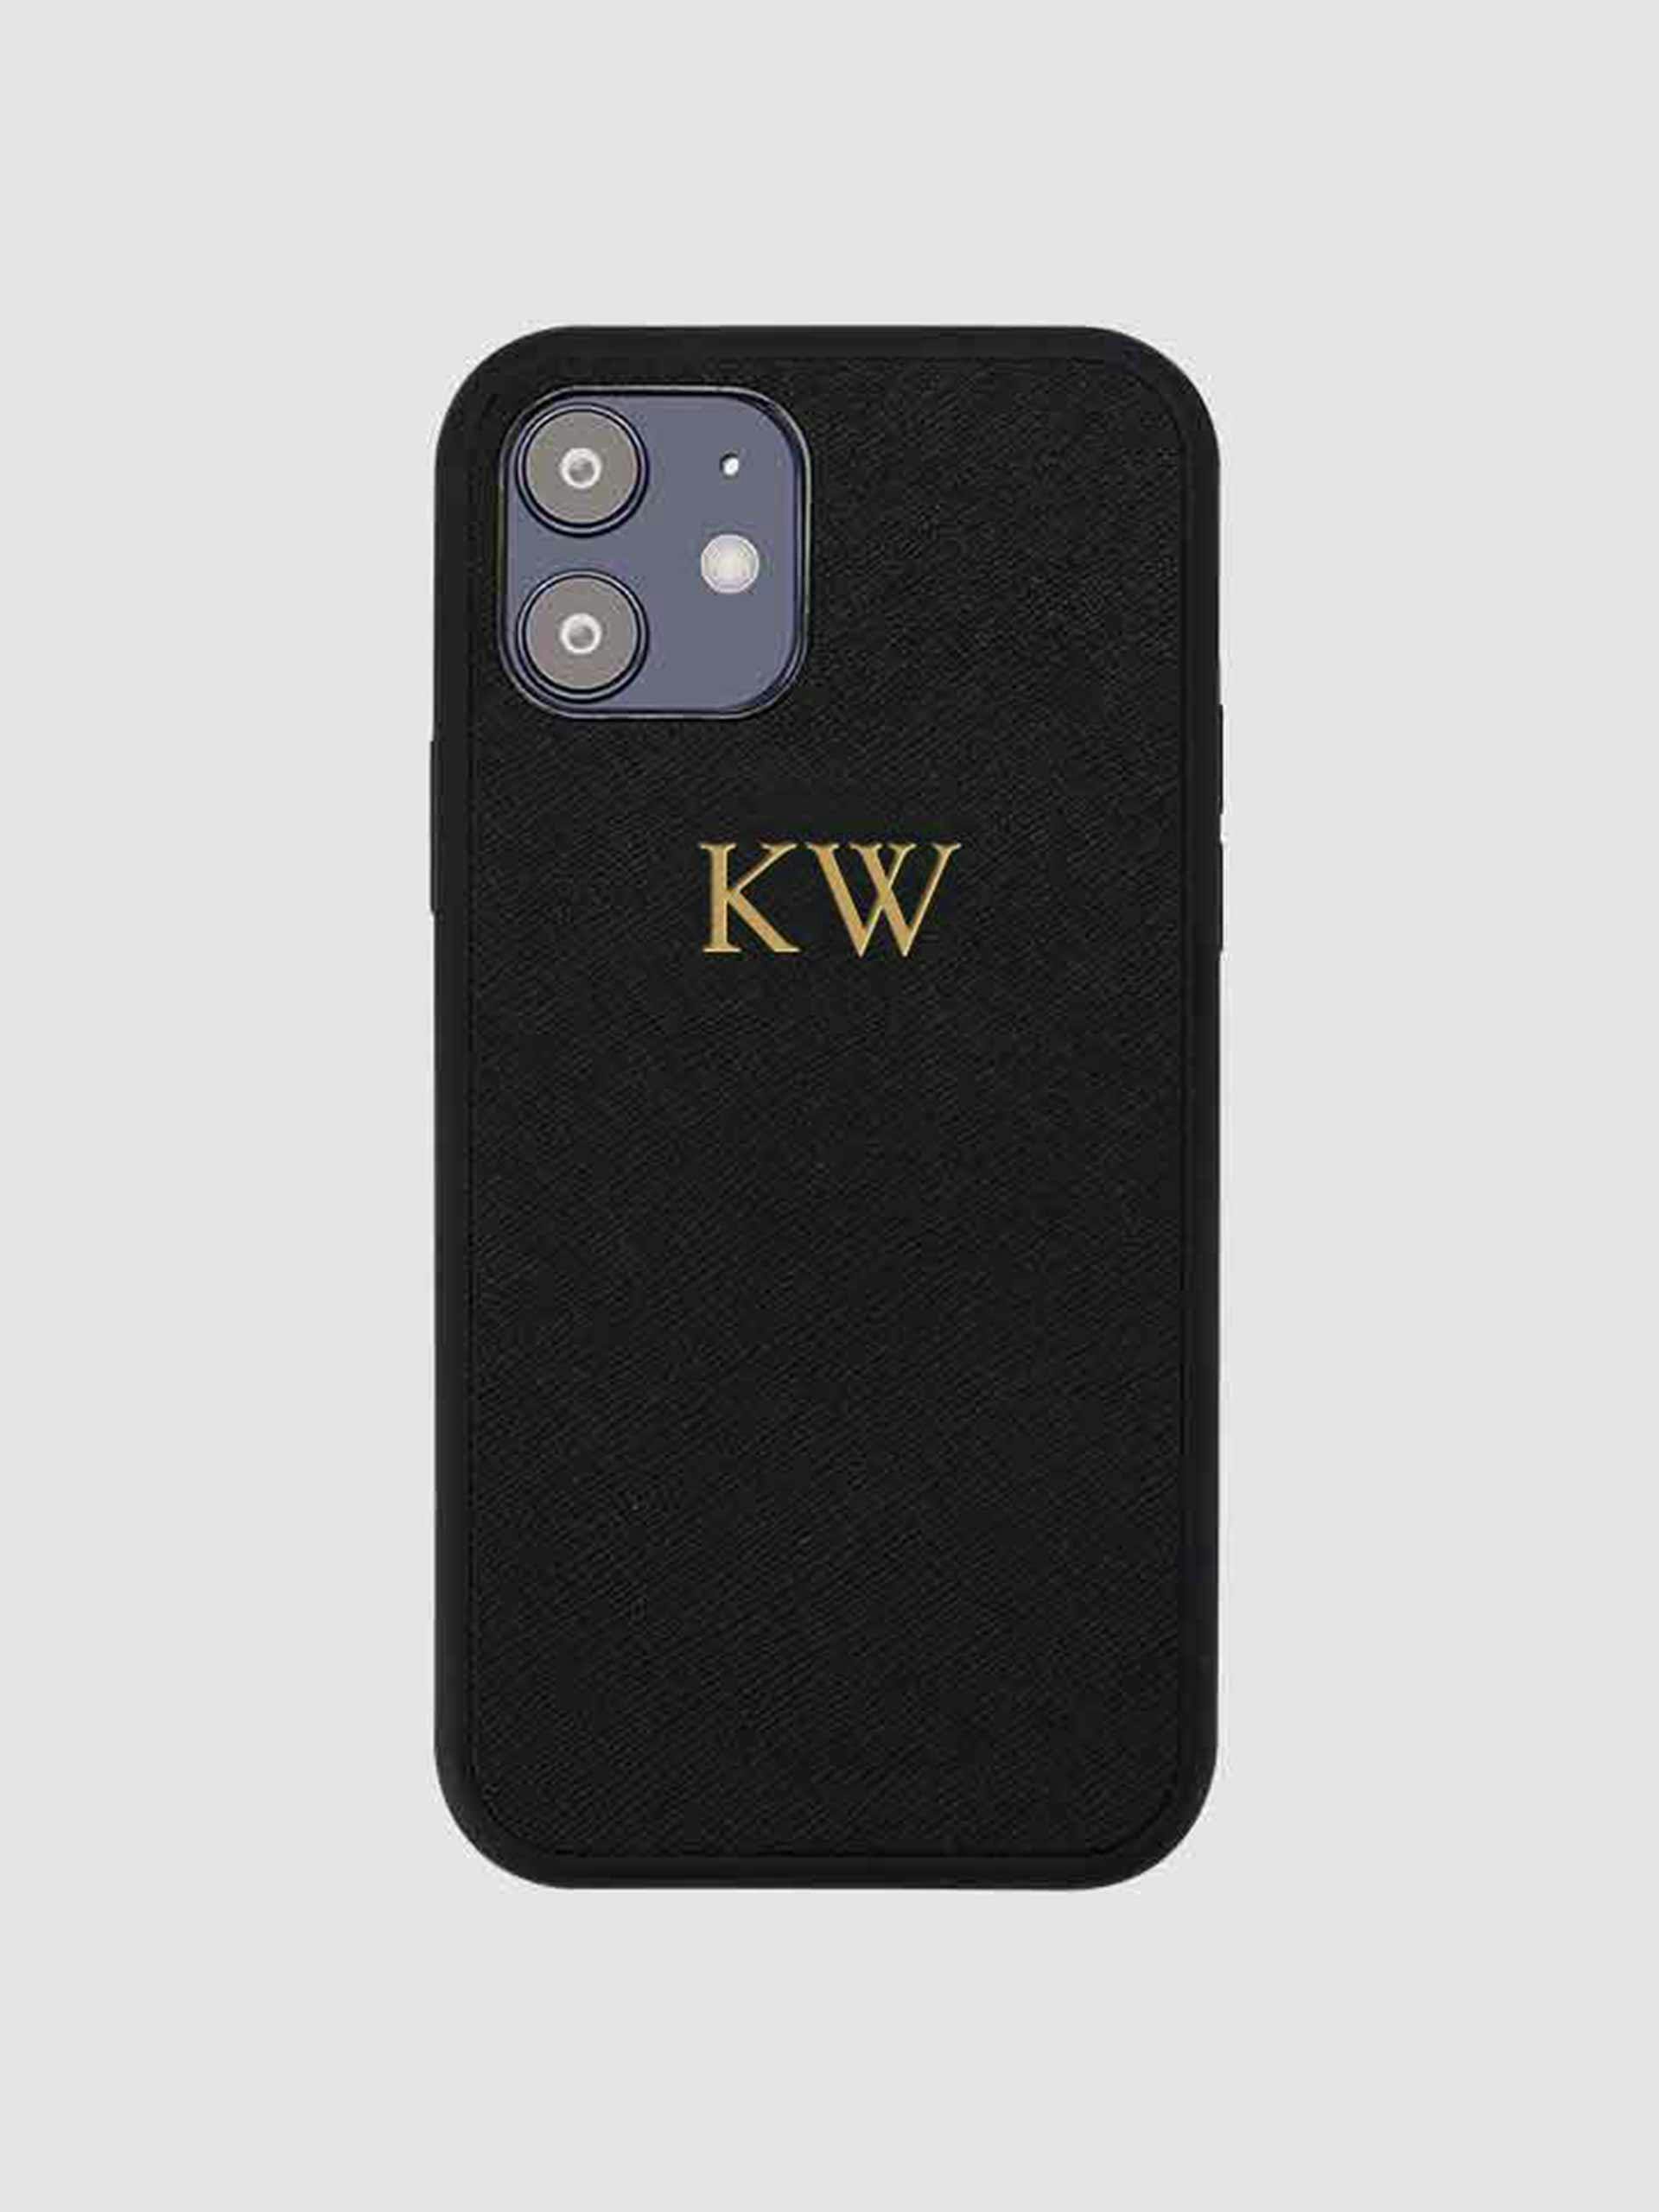 Black personalised phone case